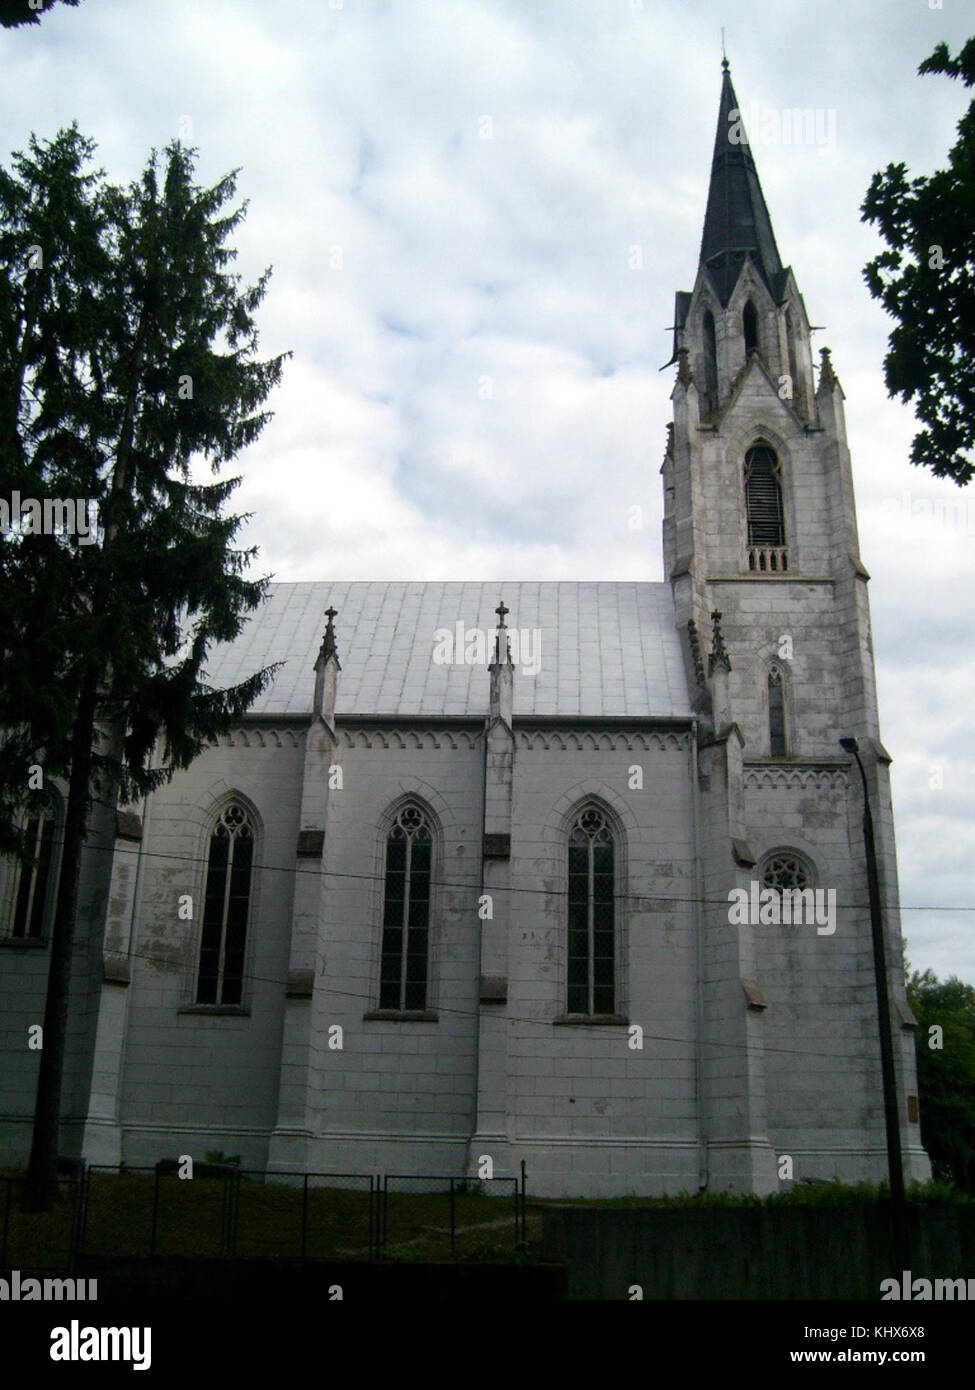 Jablonowo church2 Stock Photo